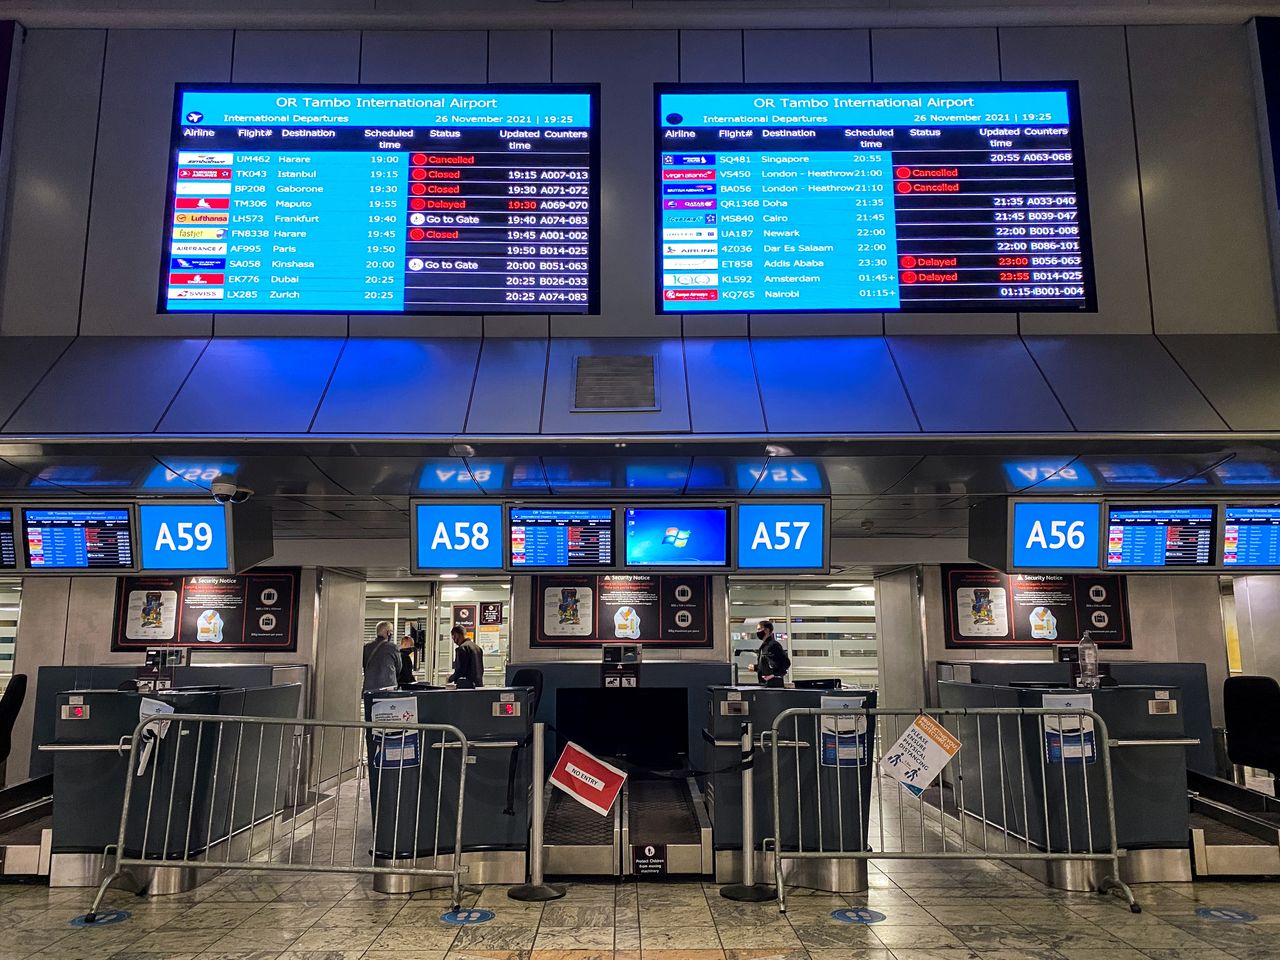 FILE PHOTO: Digital display boards show cancelled flights to London - Heathrow at O.R. Tambo International Airport in Johannesburg, South Africa, November 26, 2021. REUTERS/ Sumaya Hisham/File Photo